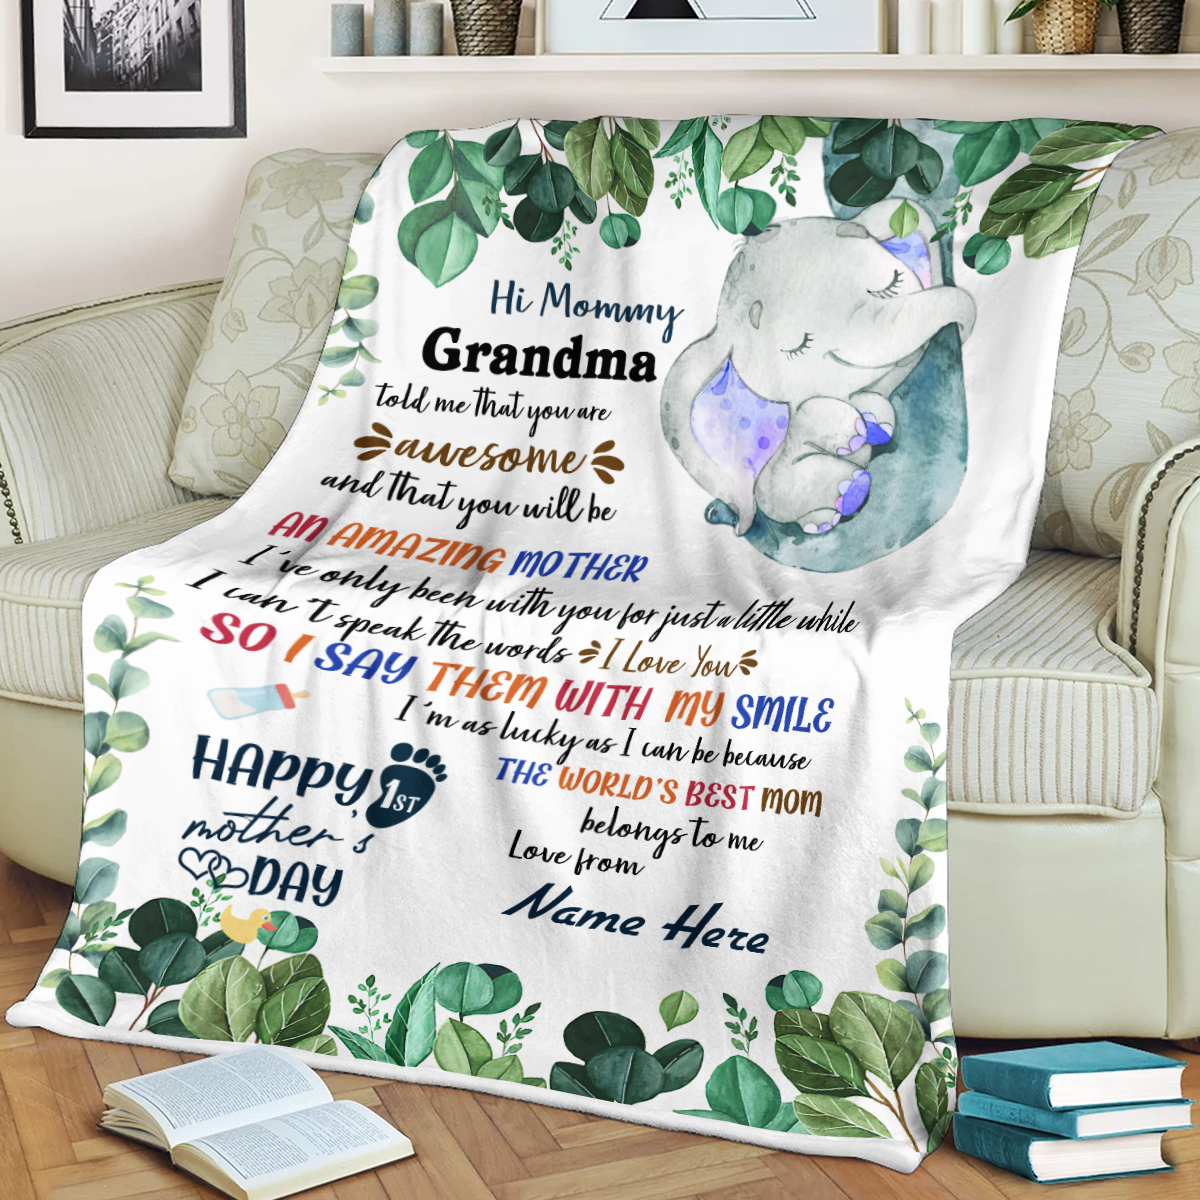 Personalized Hi Mommy Grandma Blanket, Letter Blanket, Gift From Daughter, Mothers Day Blanket, Elephant Blanket Gift For Mom, Mother’s Day Blanket – Fleece Blanket